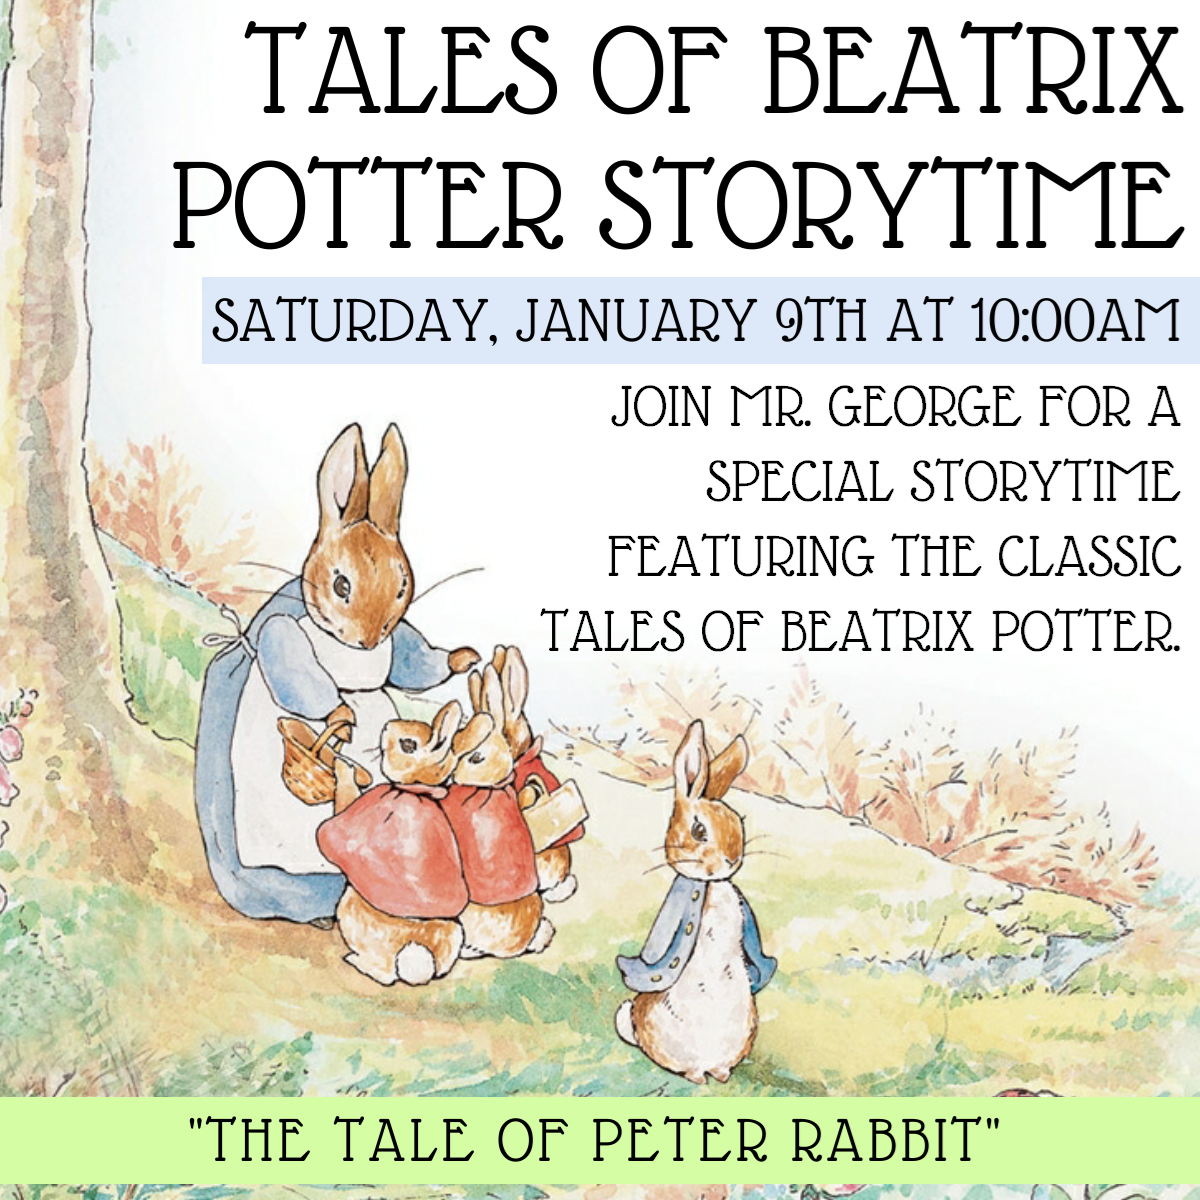 Beatrix Potter Storytime